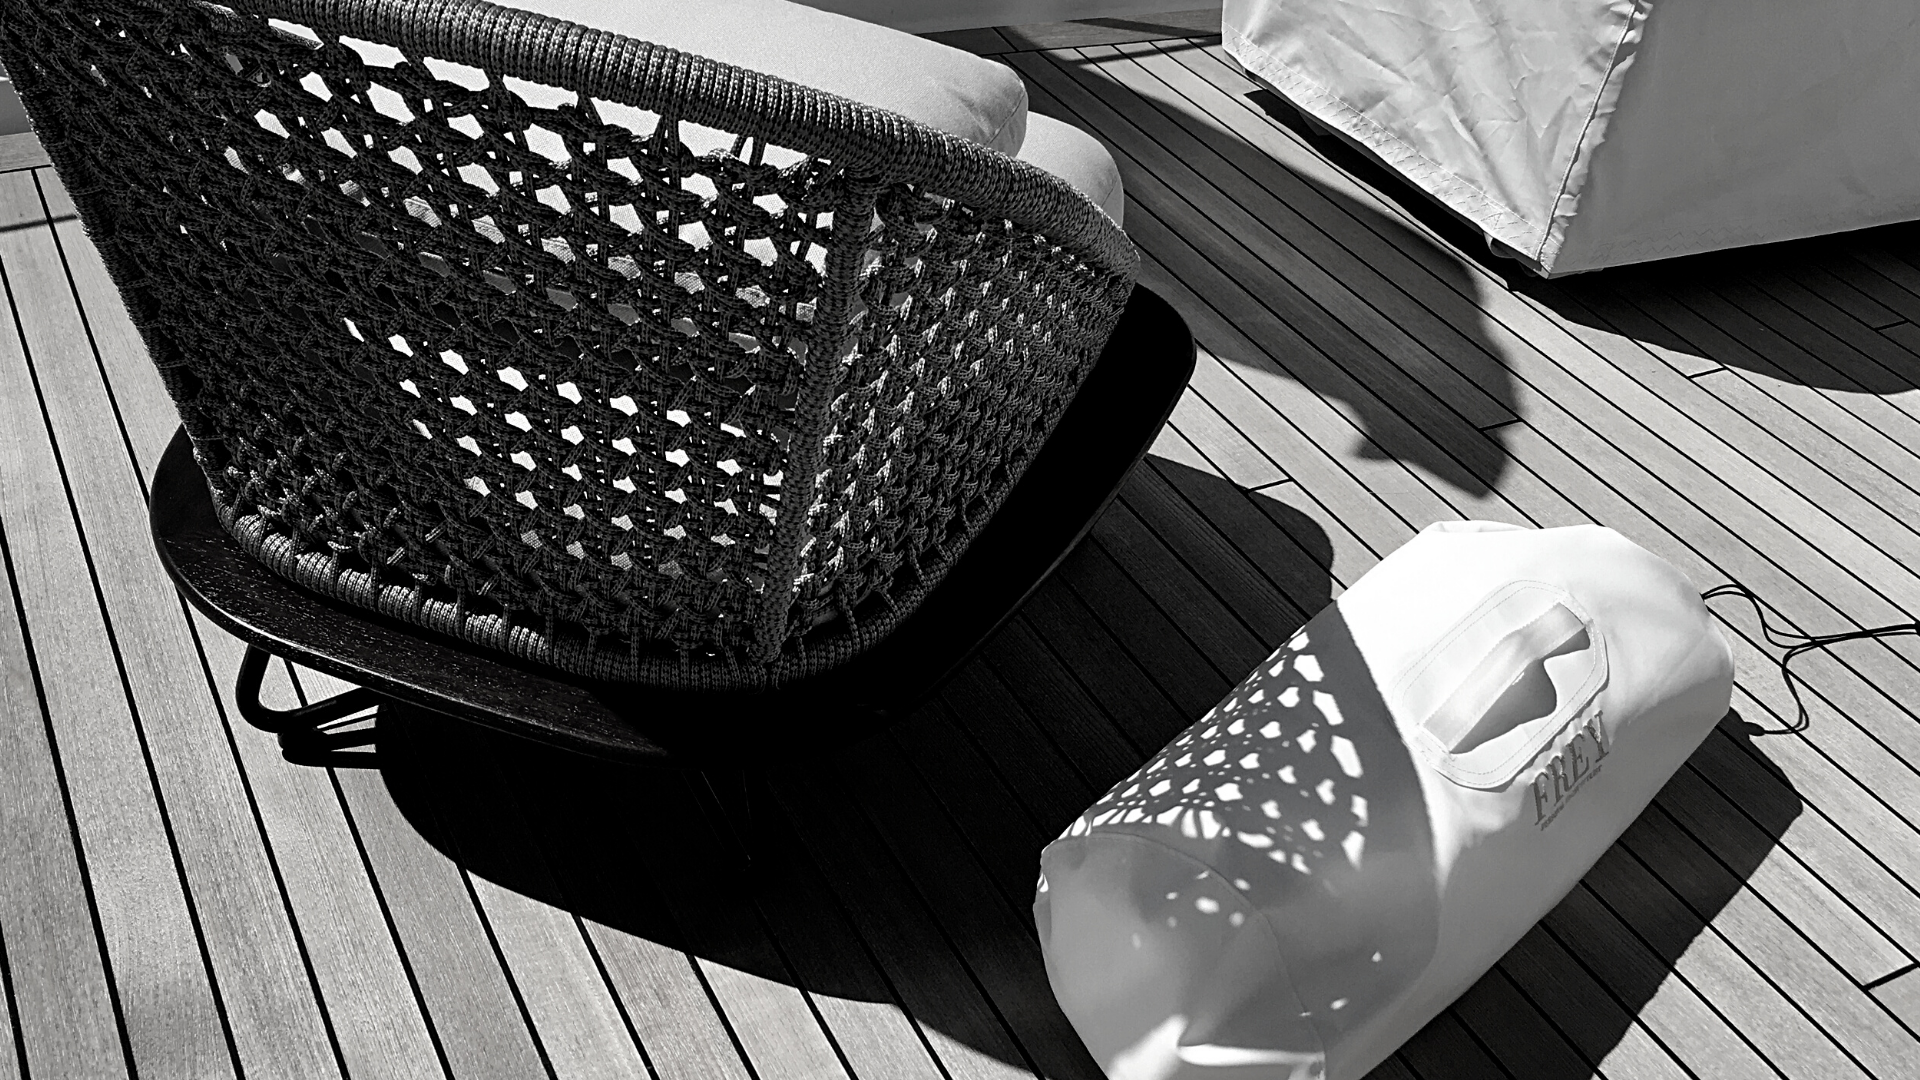 Stylish Covers for Minotti Chairs @ Sanlorenzo superyacht